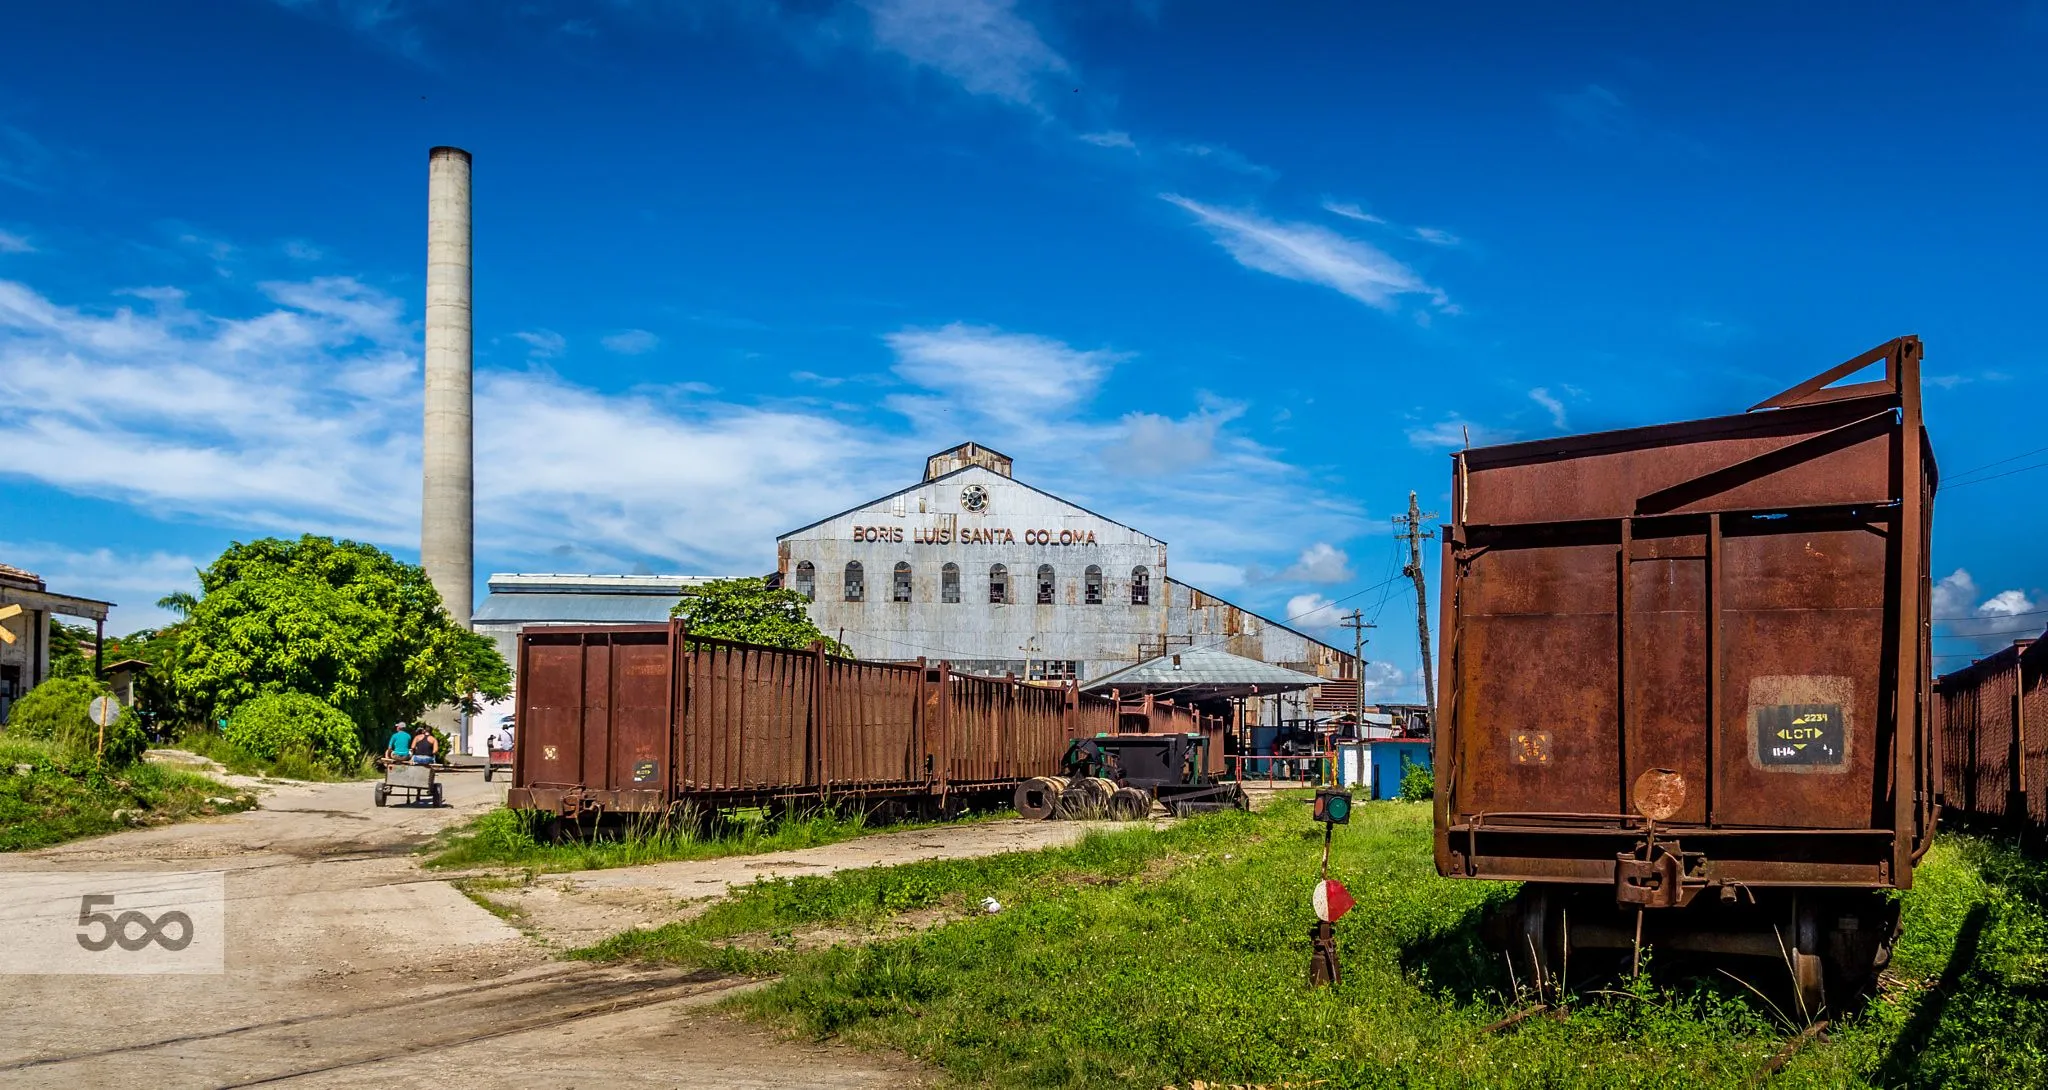 Cuba's Sugar Industry Hits Record Low - Sugar factory Cuba. (Photo Internet reproduction)